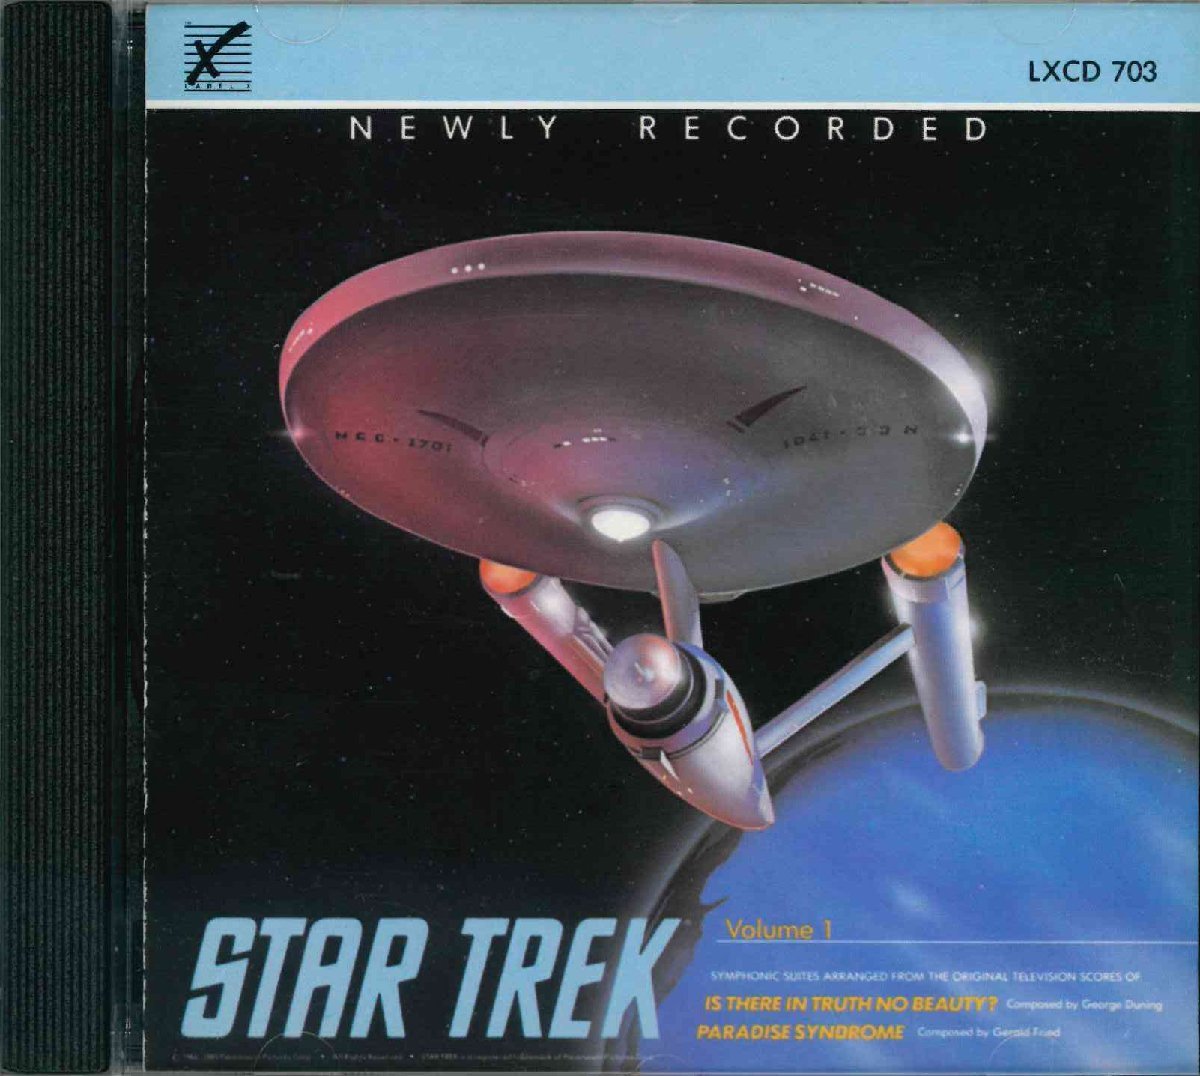 [CD］STAR TREK Symphonic Suites Arranged from the Original TV Scores-Volume 1[輸入盤] LXCD703 [S600425]_画像1